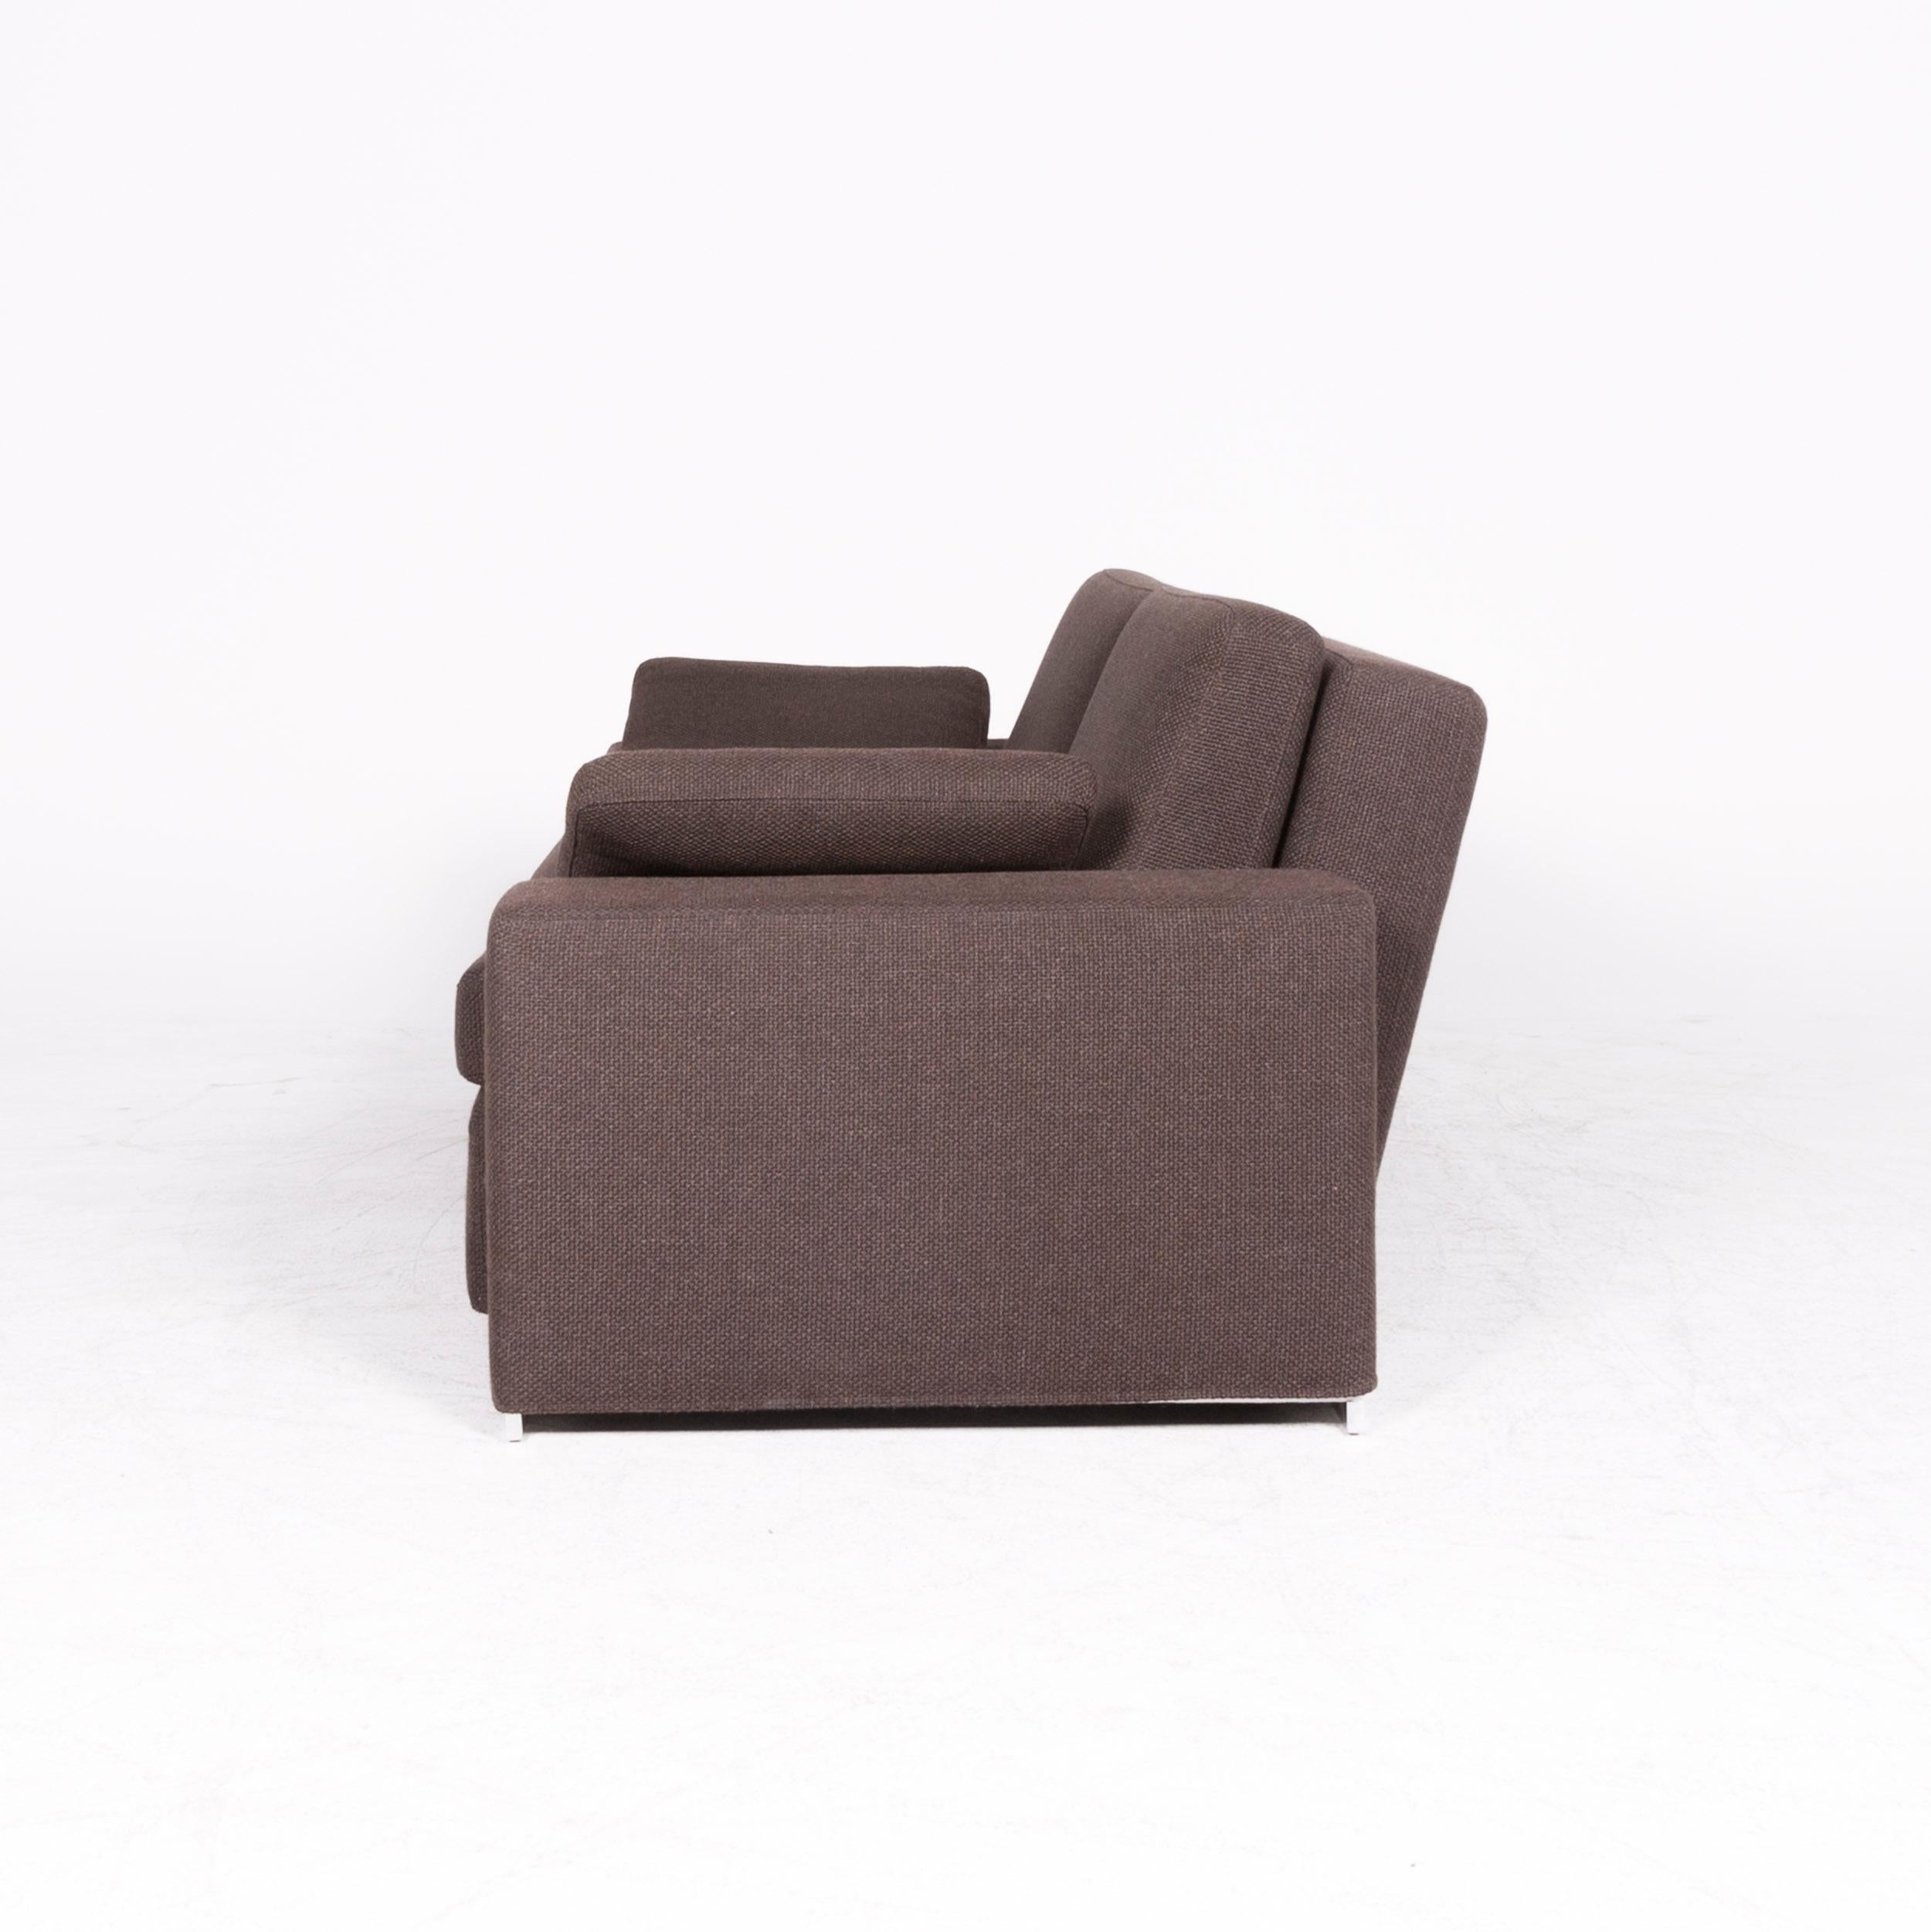 Brühl & Sippold Designer Fabric Sofa Brown Two-Seat Sofa Function Sofa Bed 6